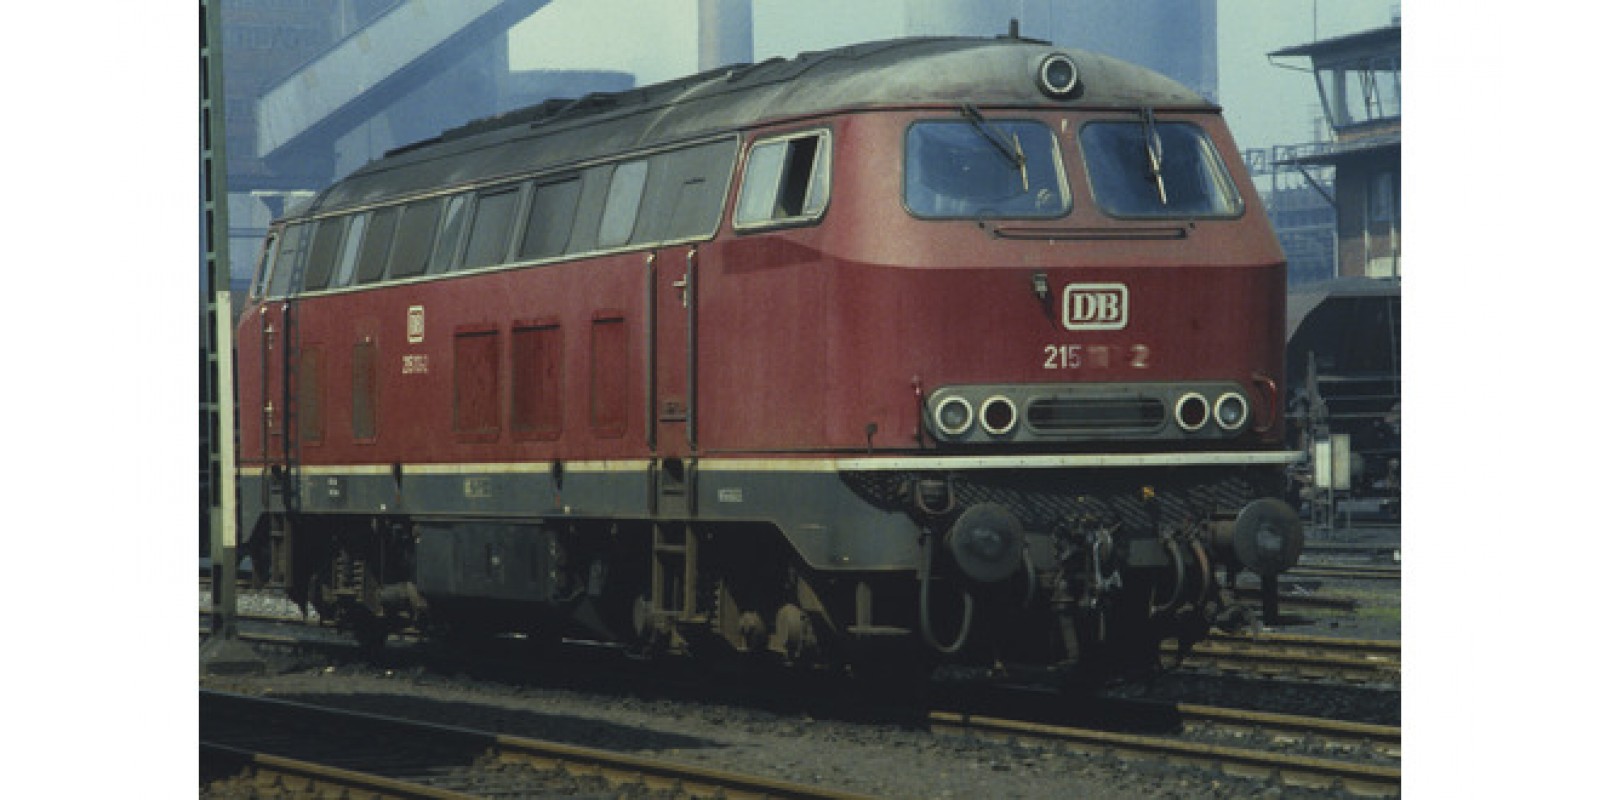 FL424003 - Diesel locomotive class 215, DB